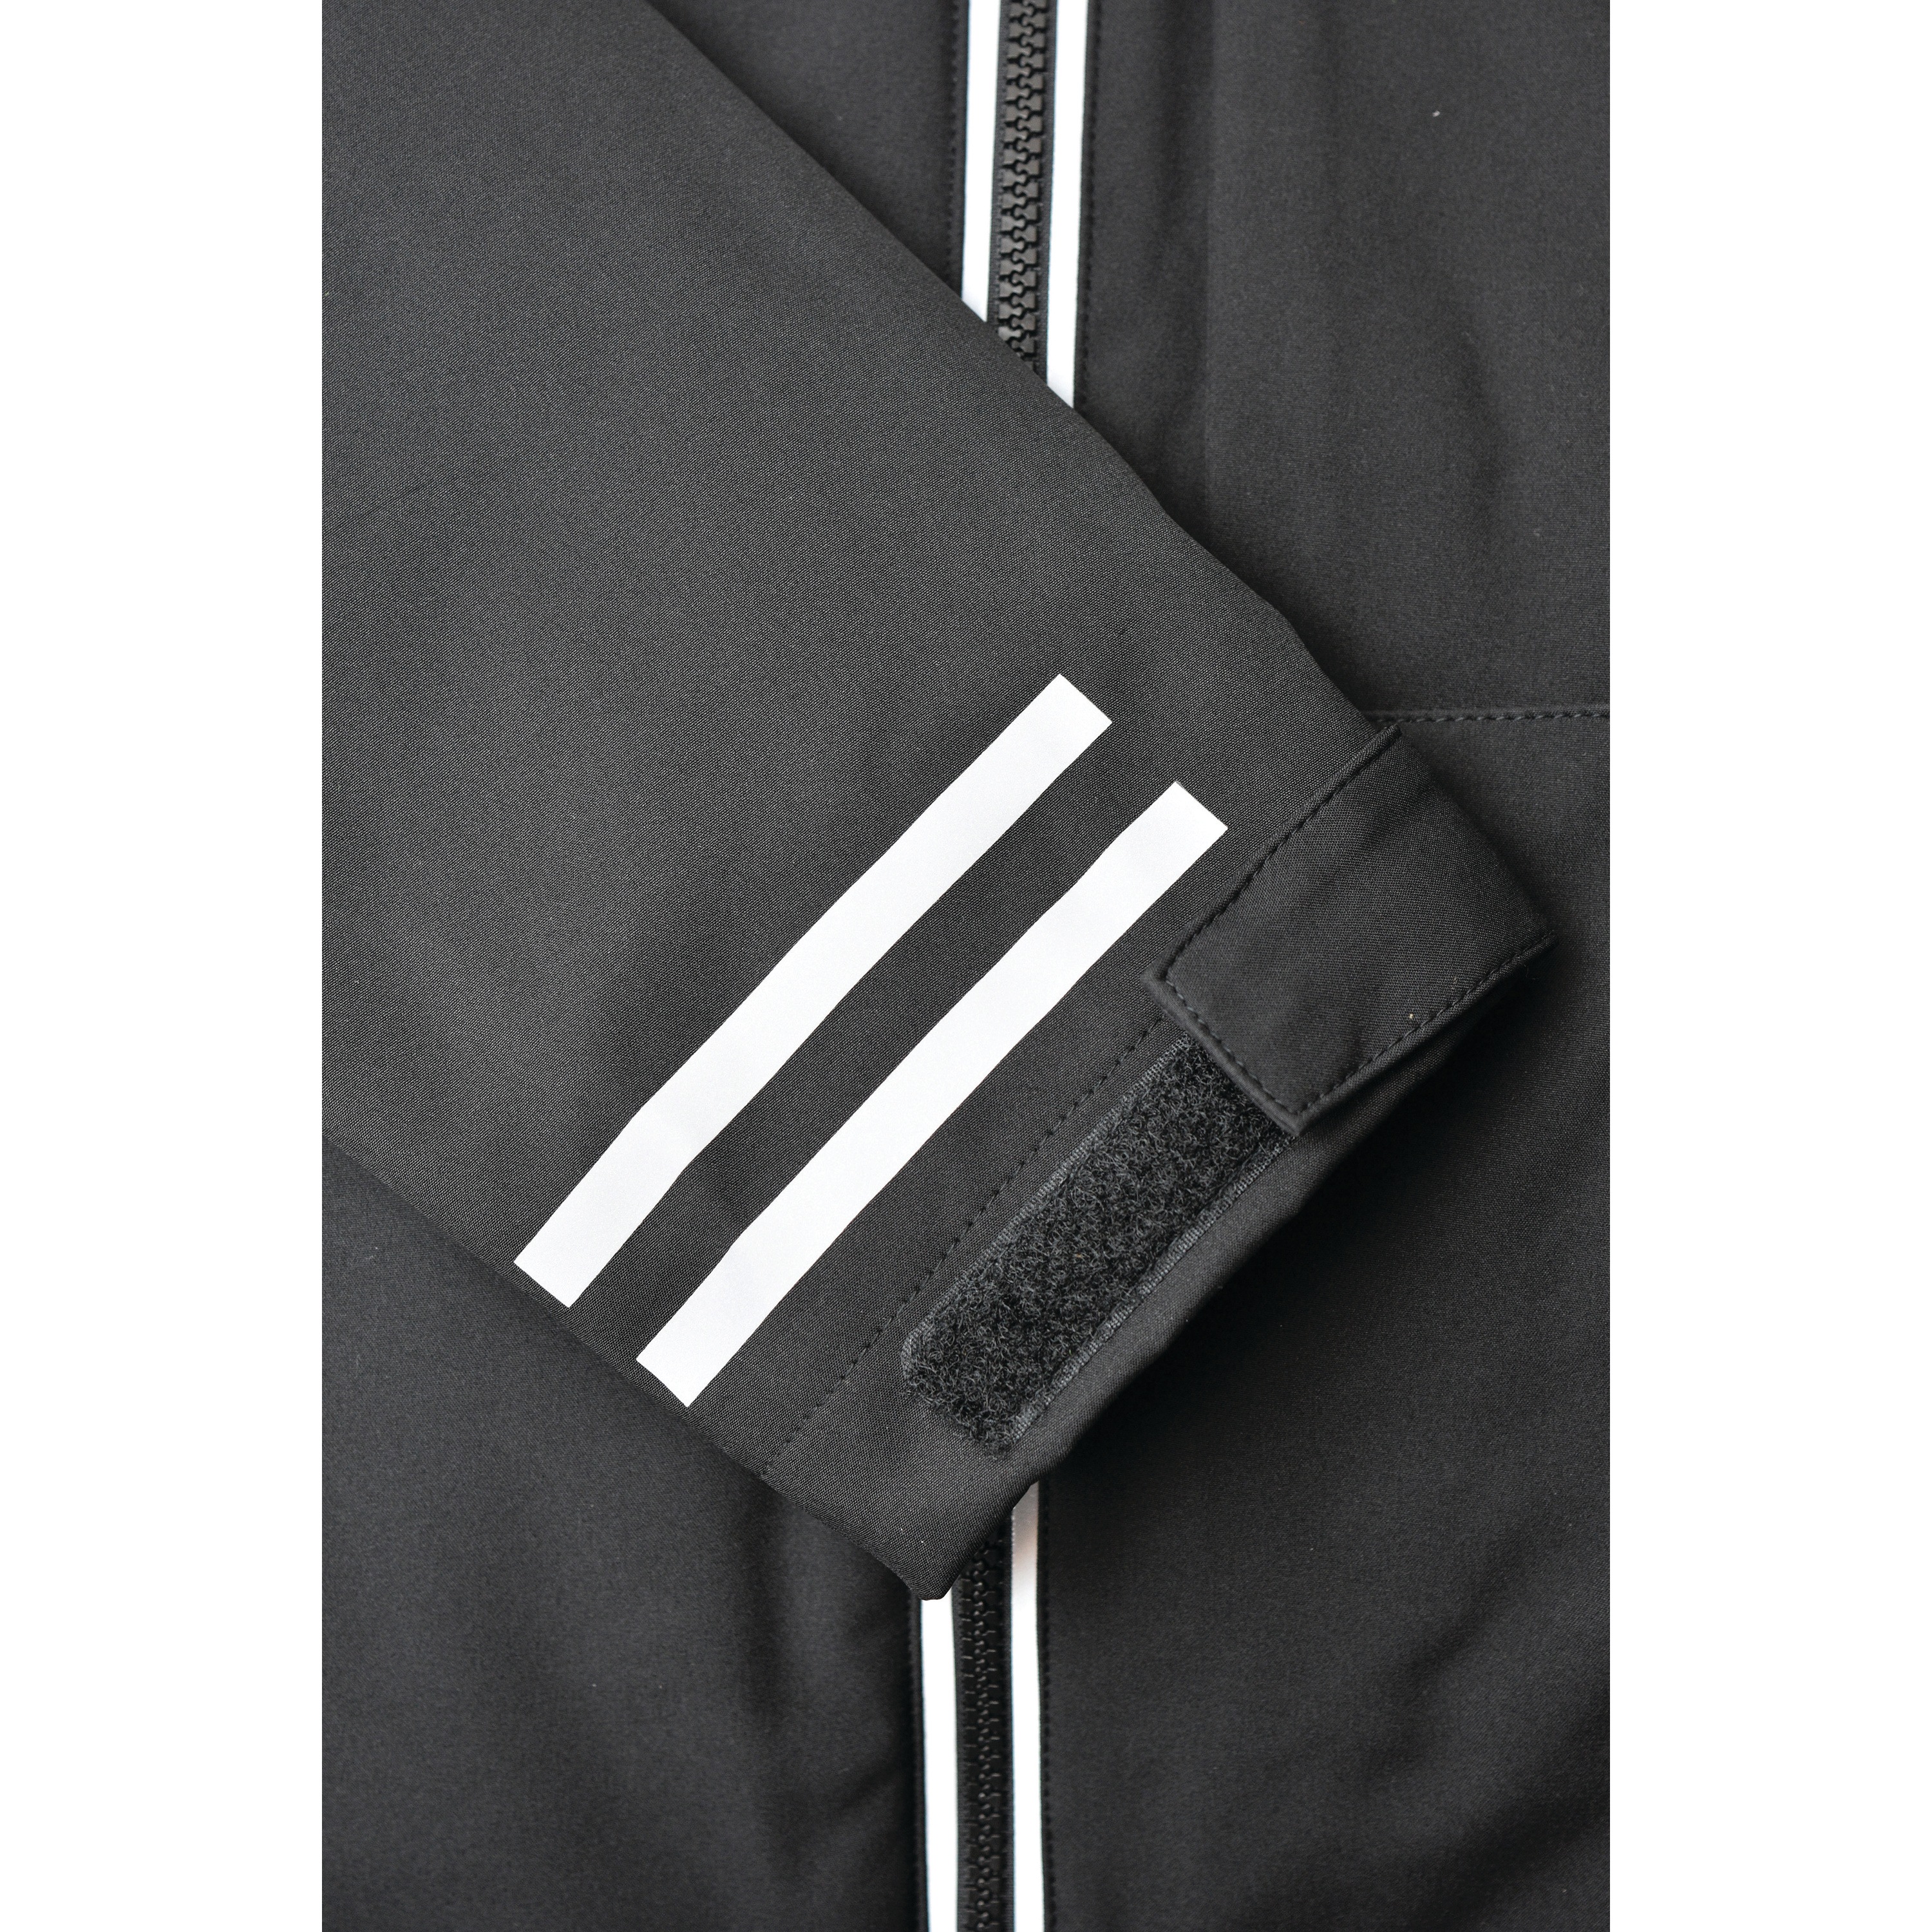 Close Up featuring sleeve cuff of  lightweight heated jacket